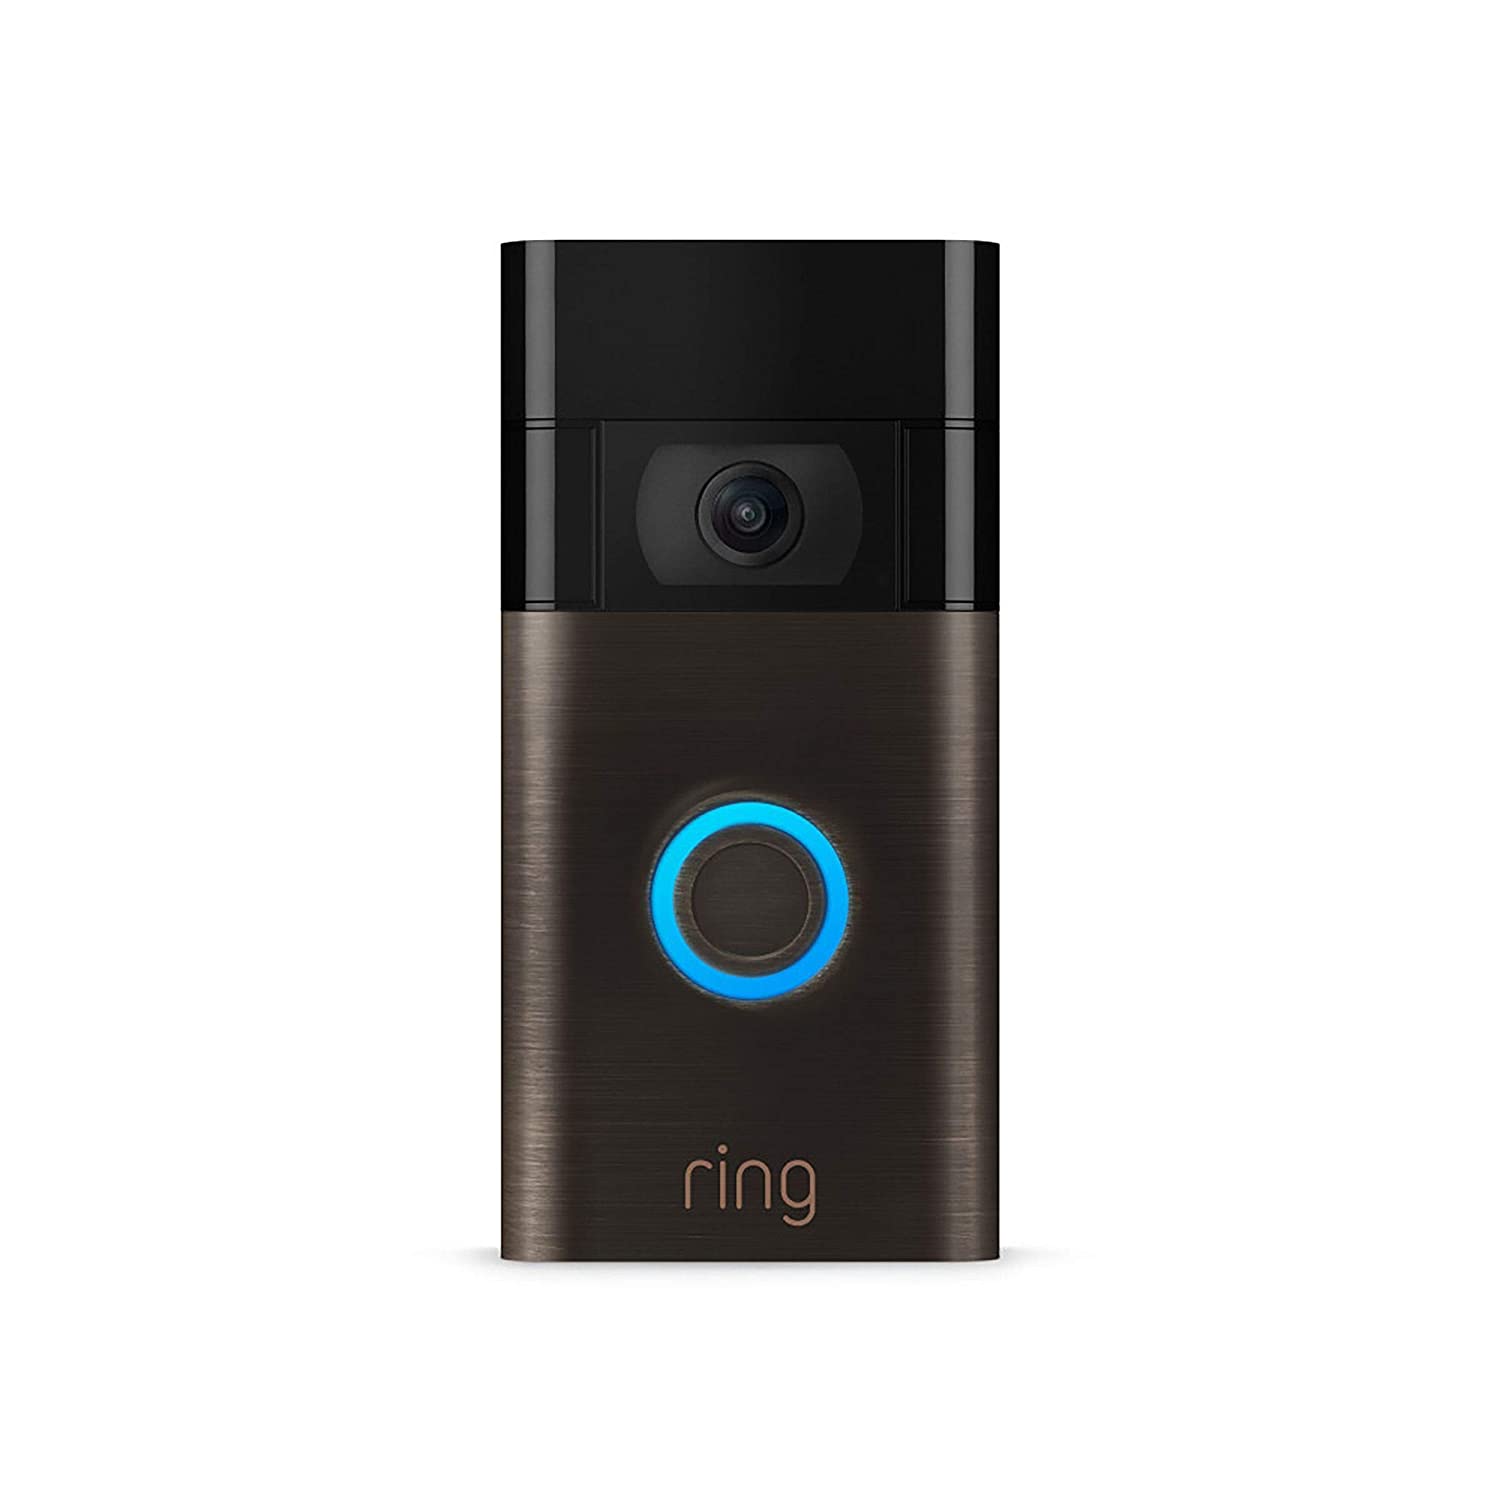 Ring Video Doorbell – 1080p HD video, improved motion detection, easy installation – Venetian Bronze $69.91